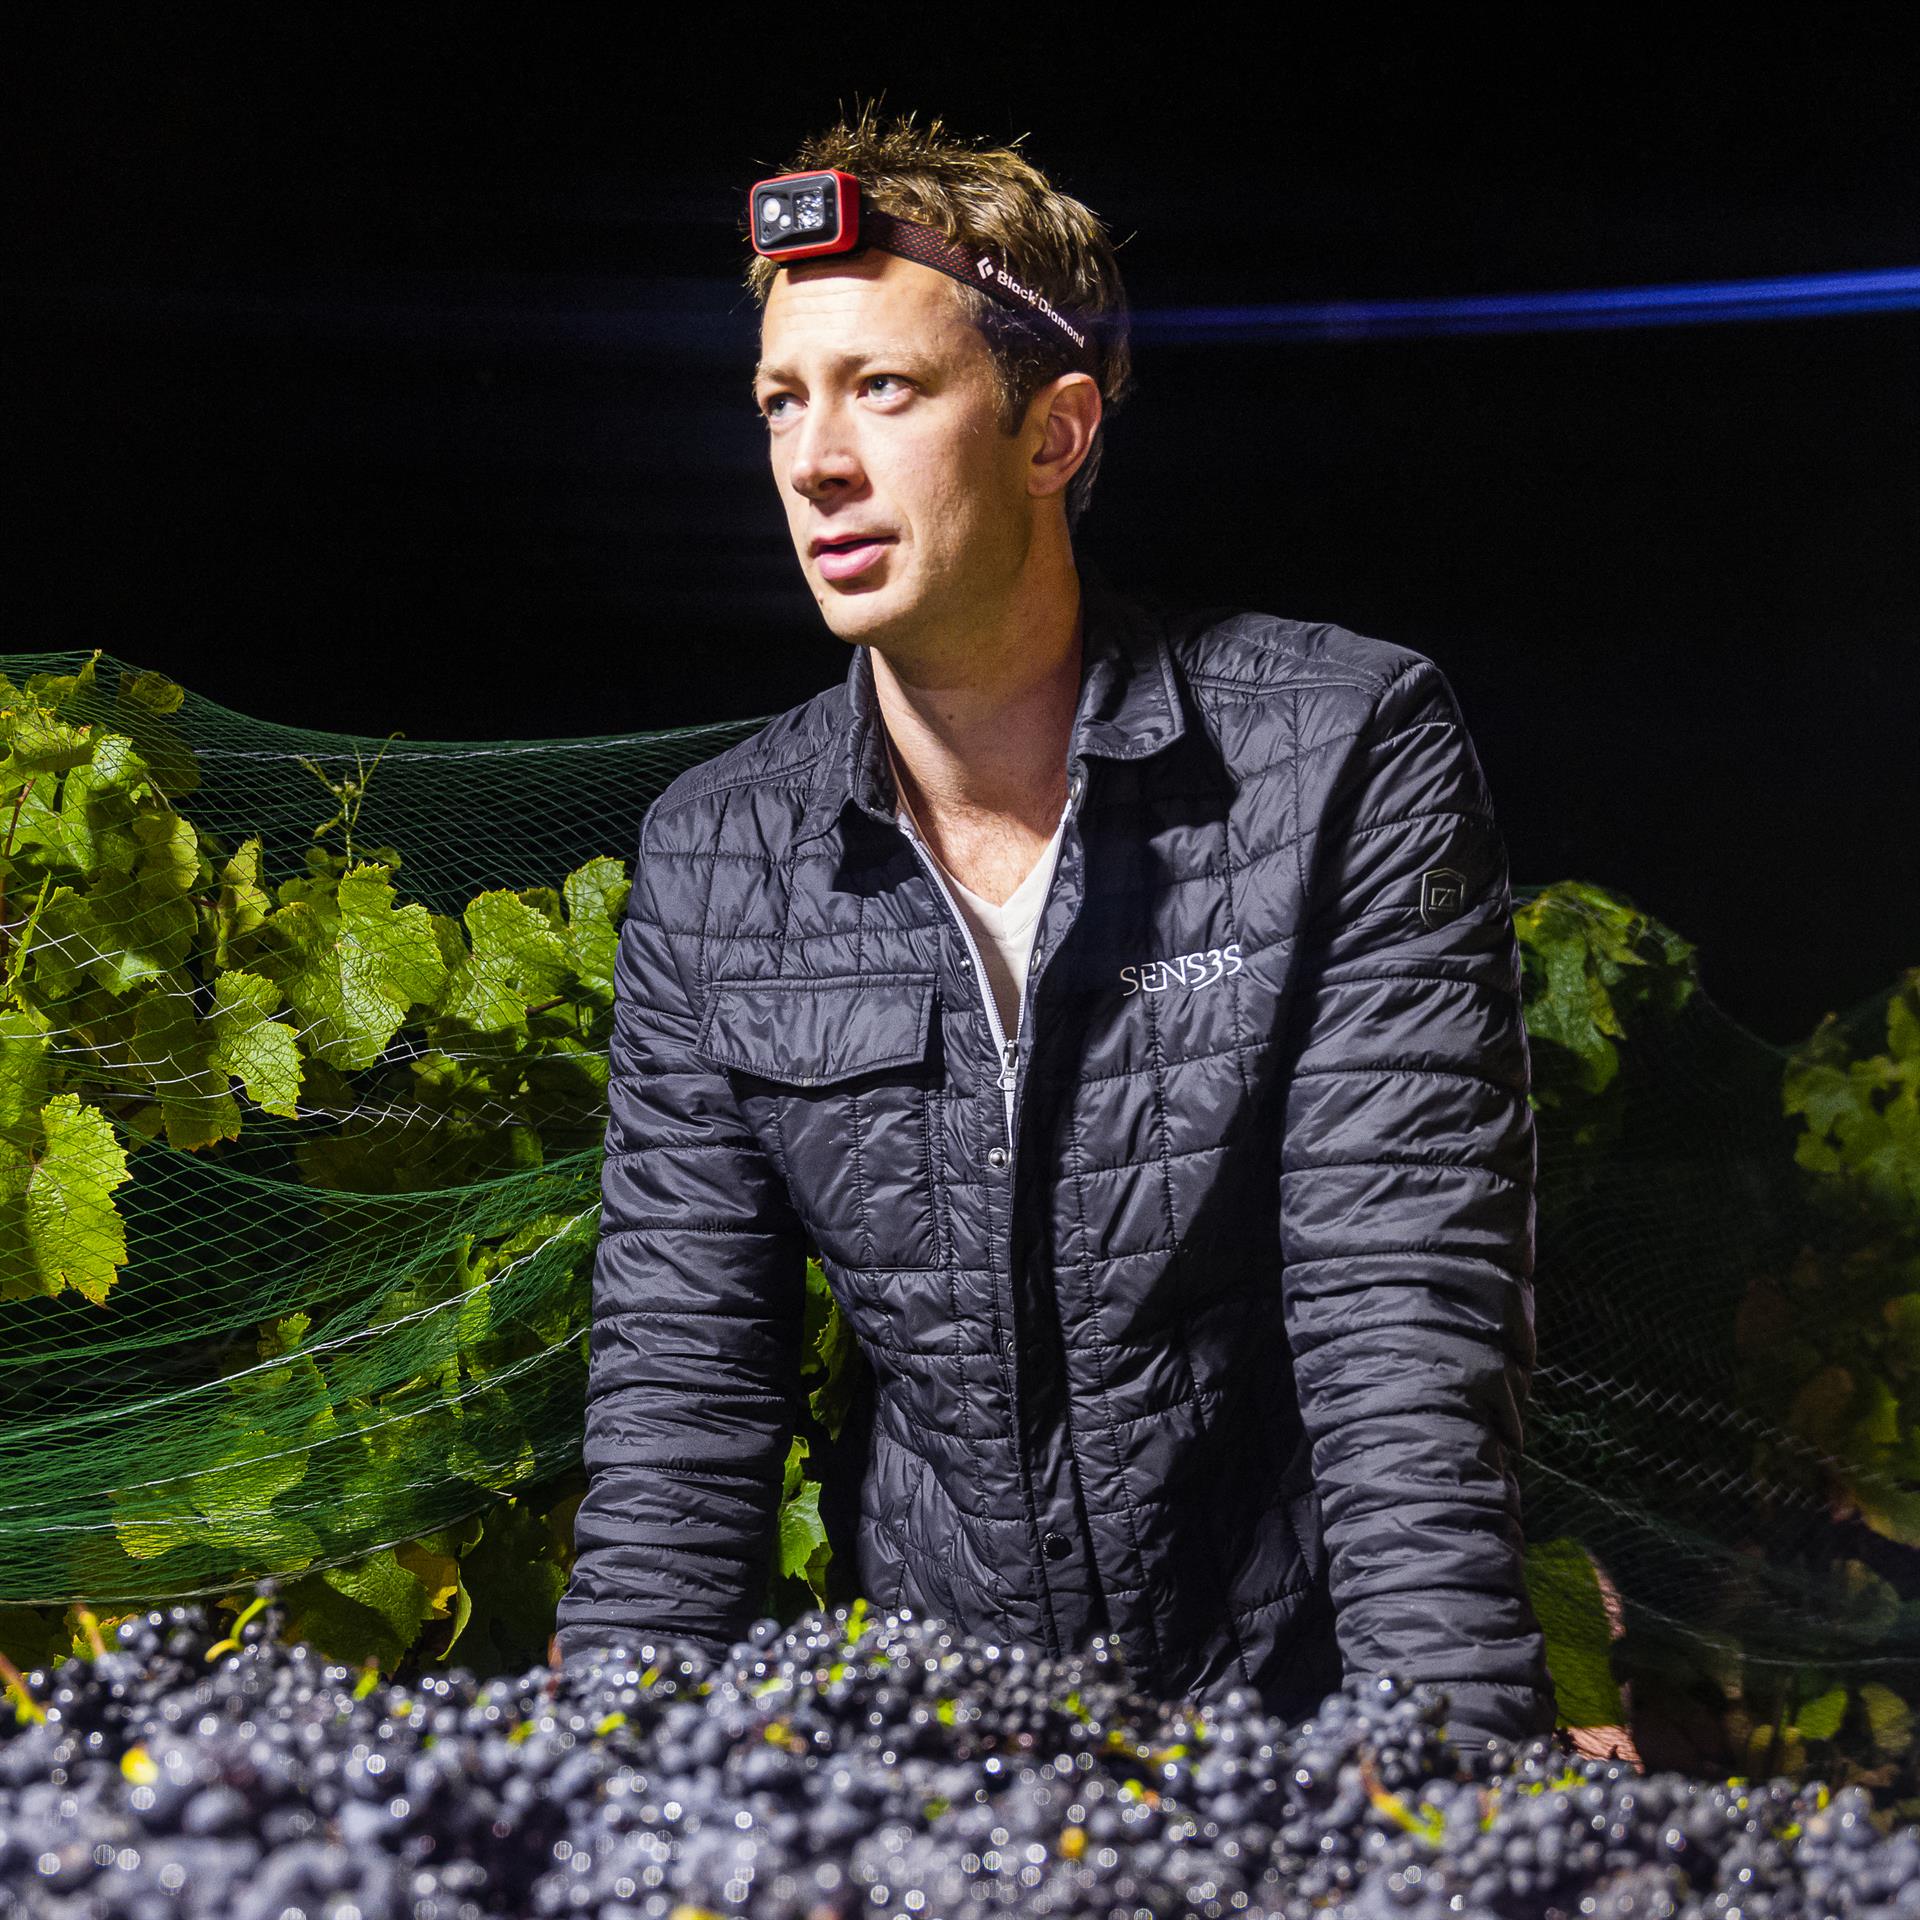 Christopher profile grapes harvest jakwonderly